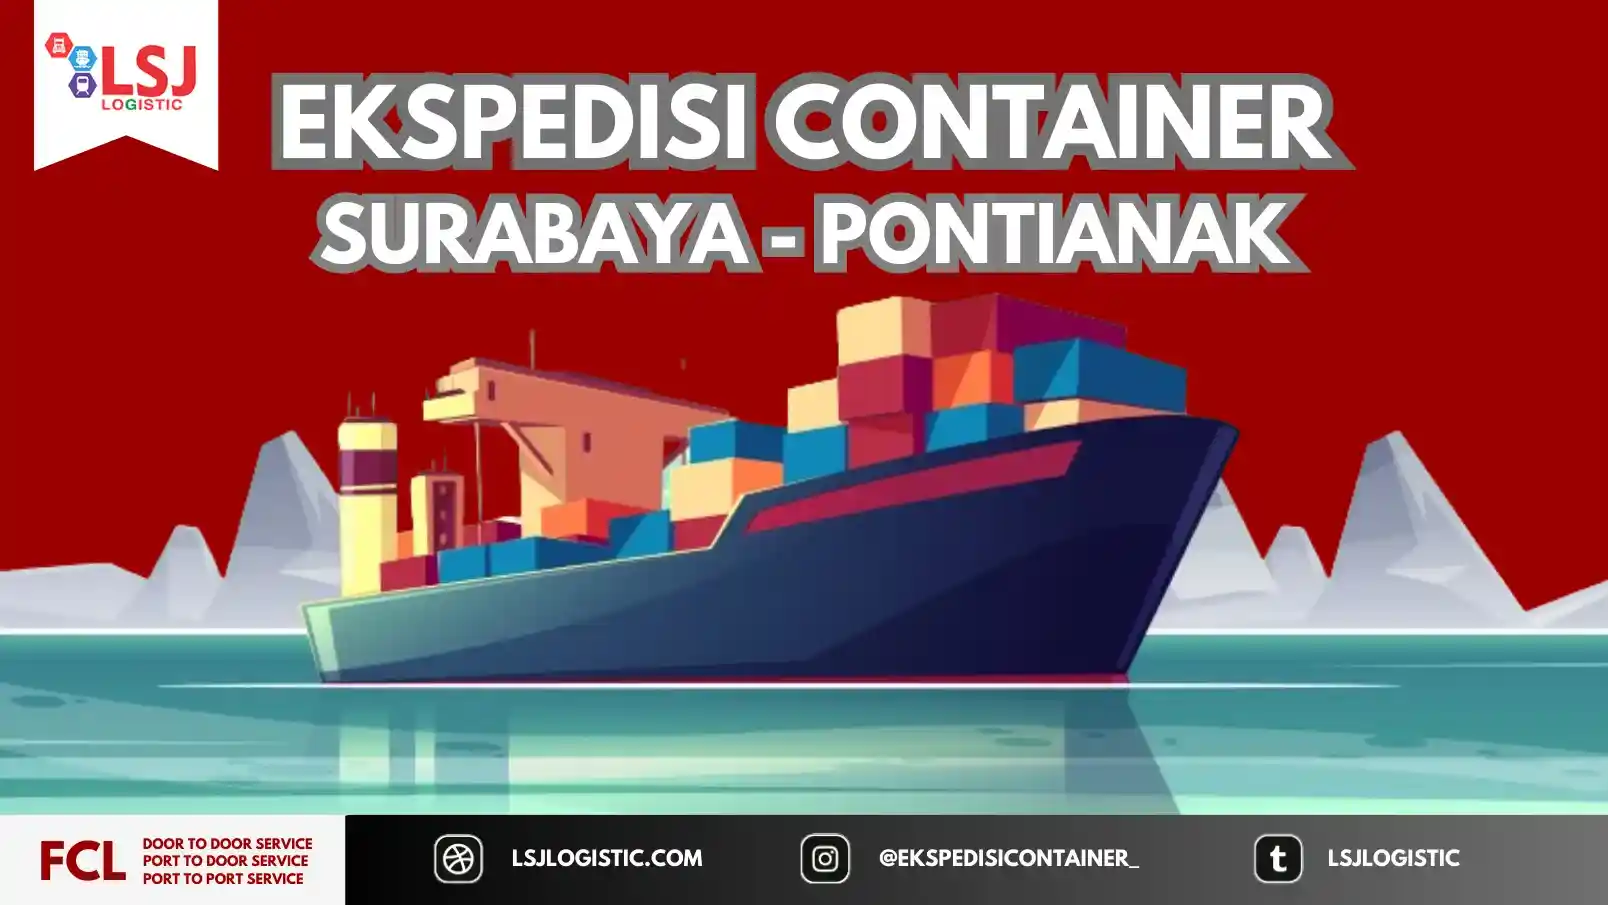 Ongkos Kirim Container Surabaya Pontianak